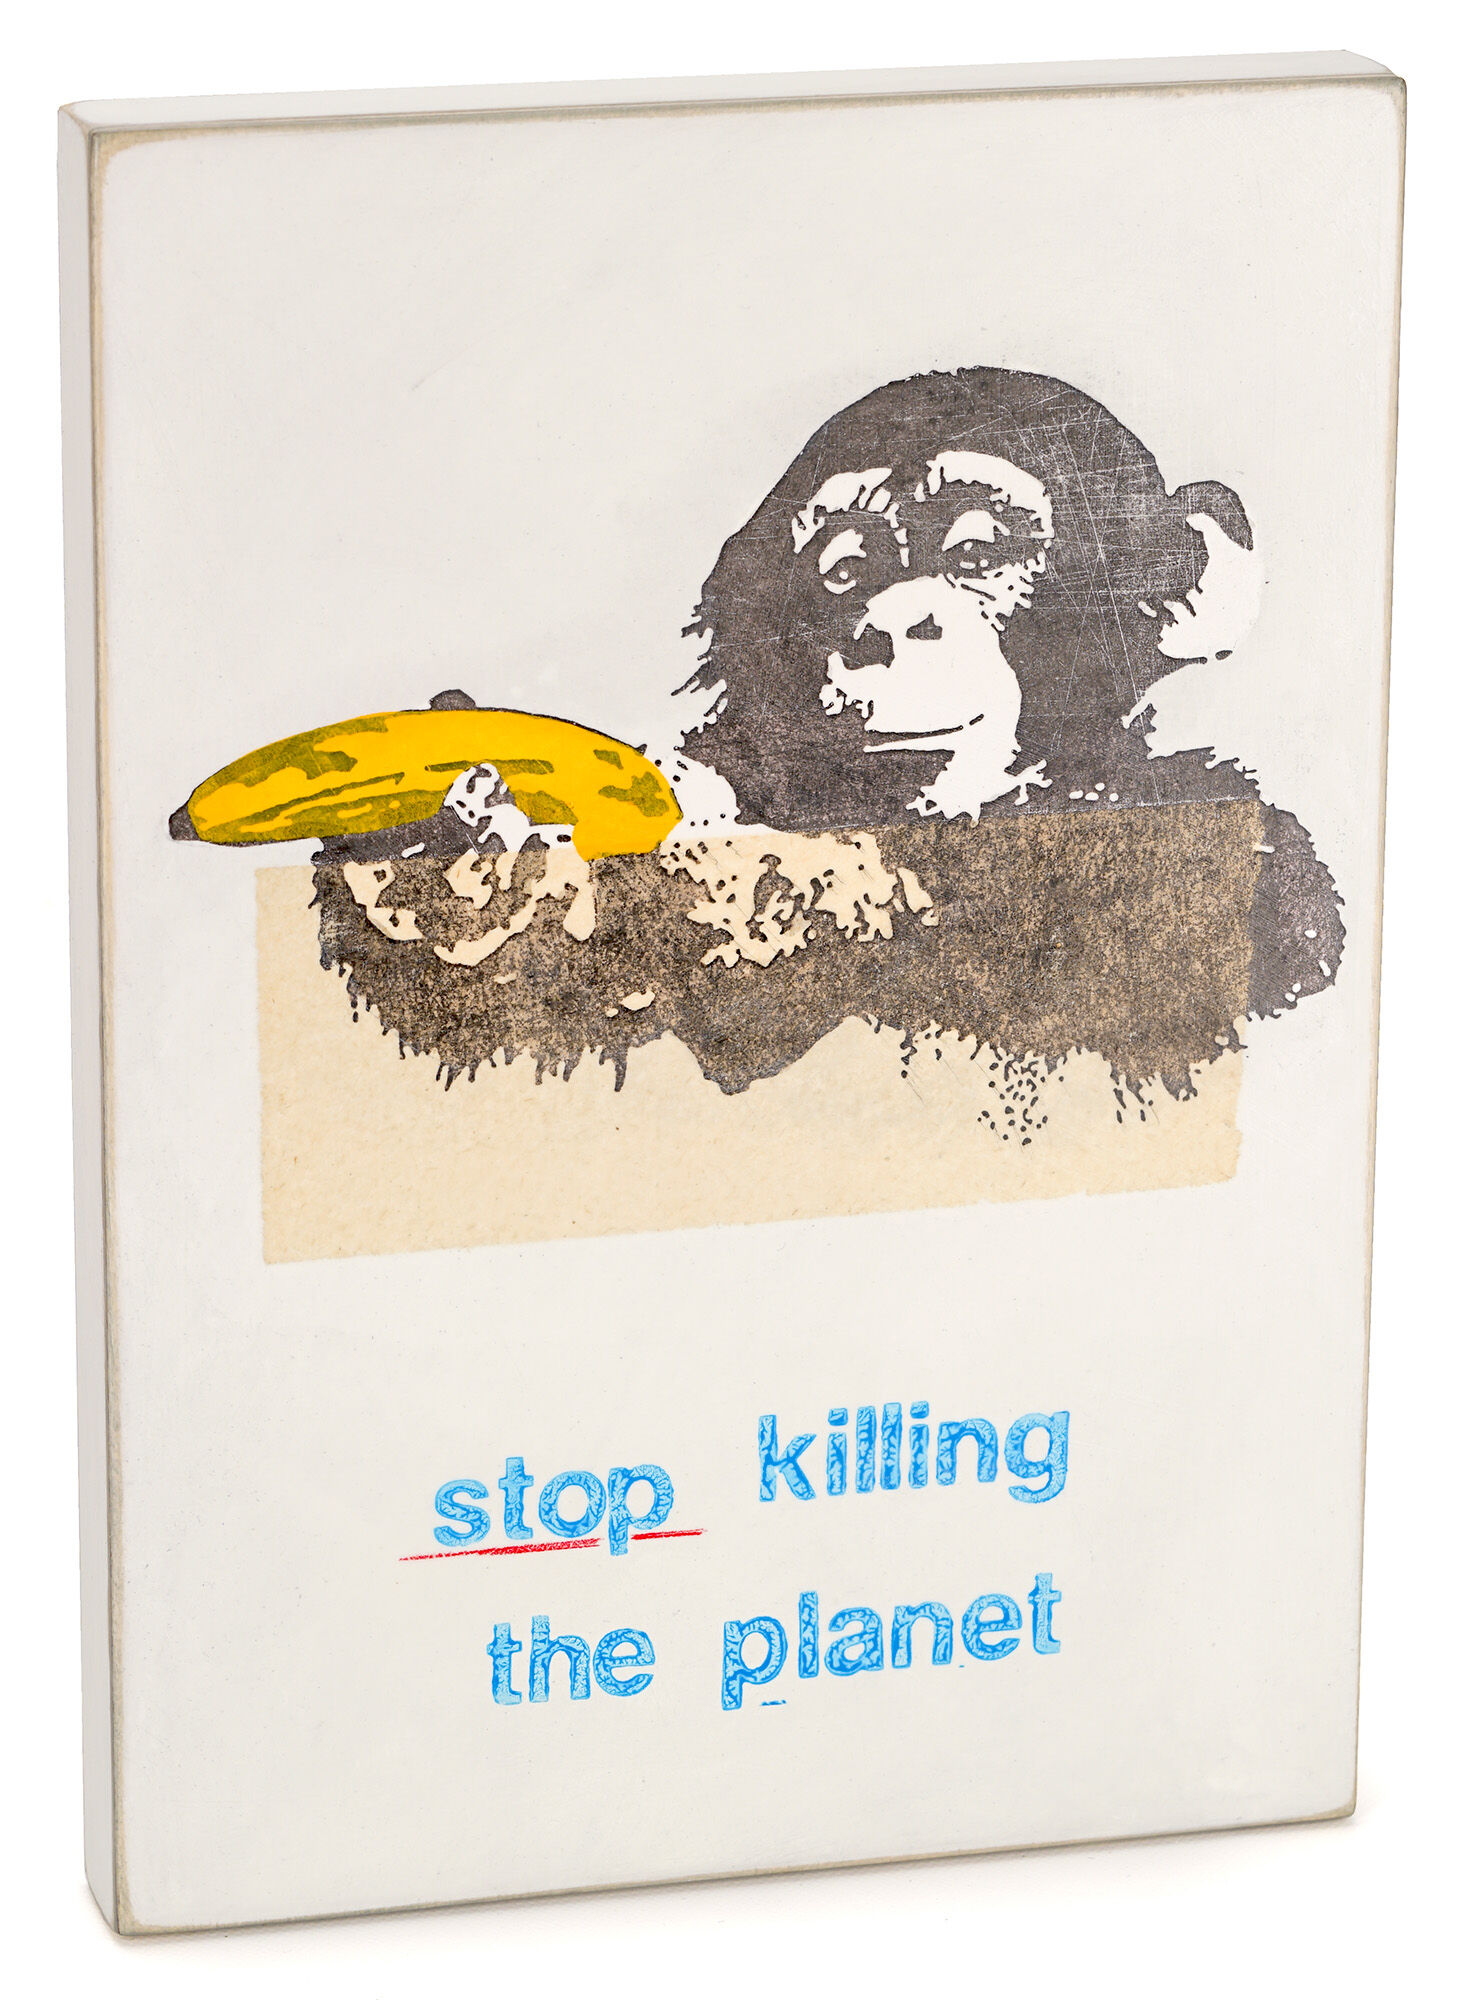 Objet "stop killing the planet" (2023), bois von Jan M. Petersen